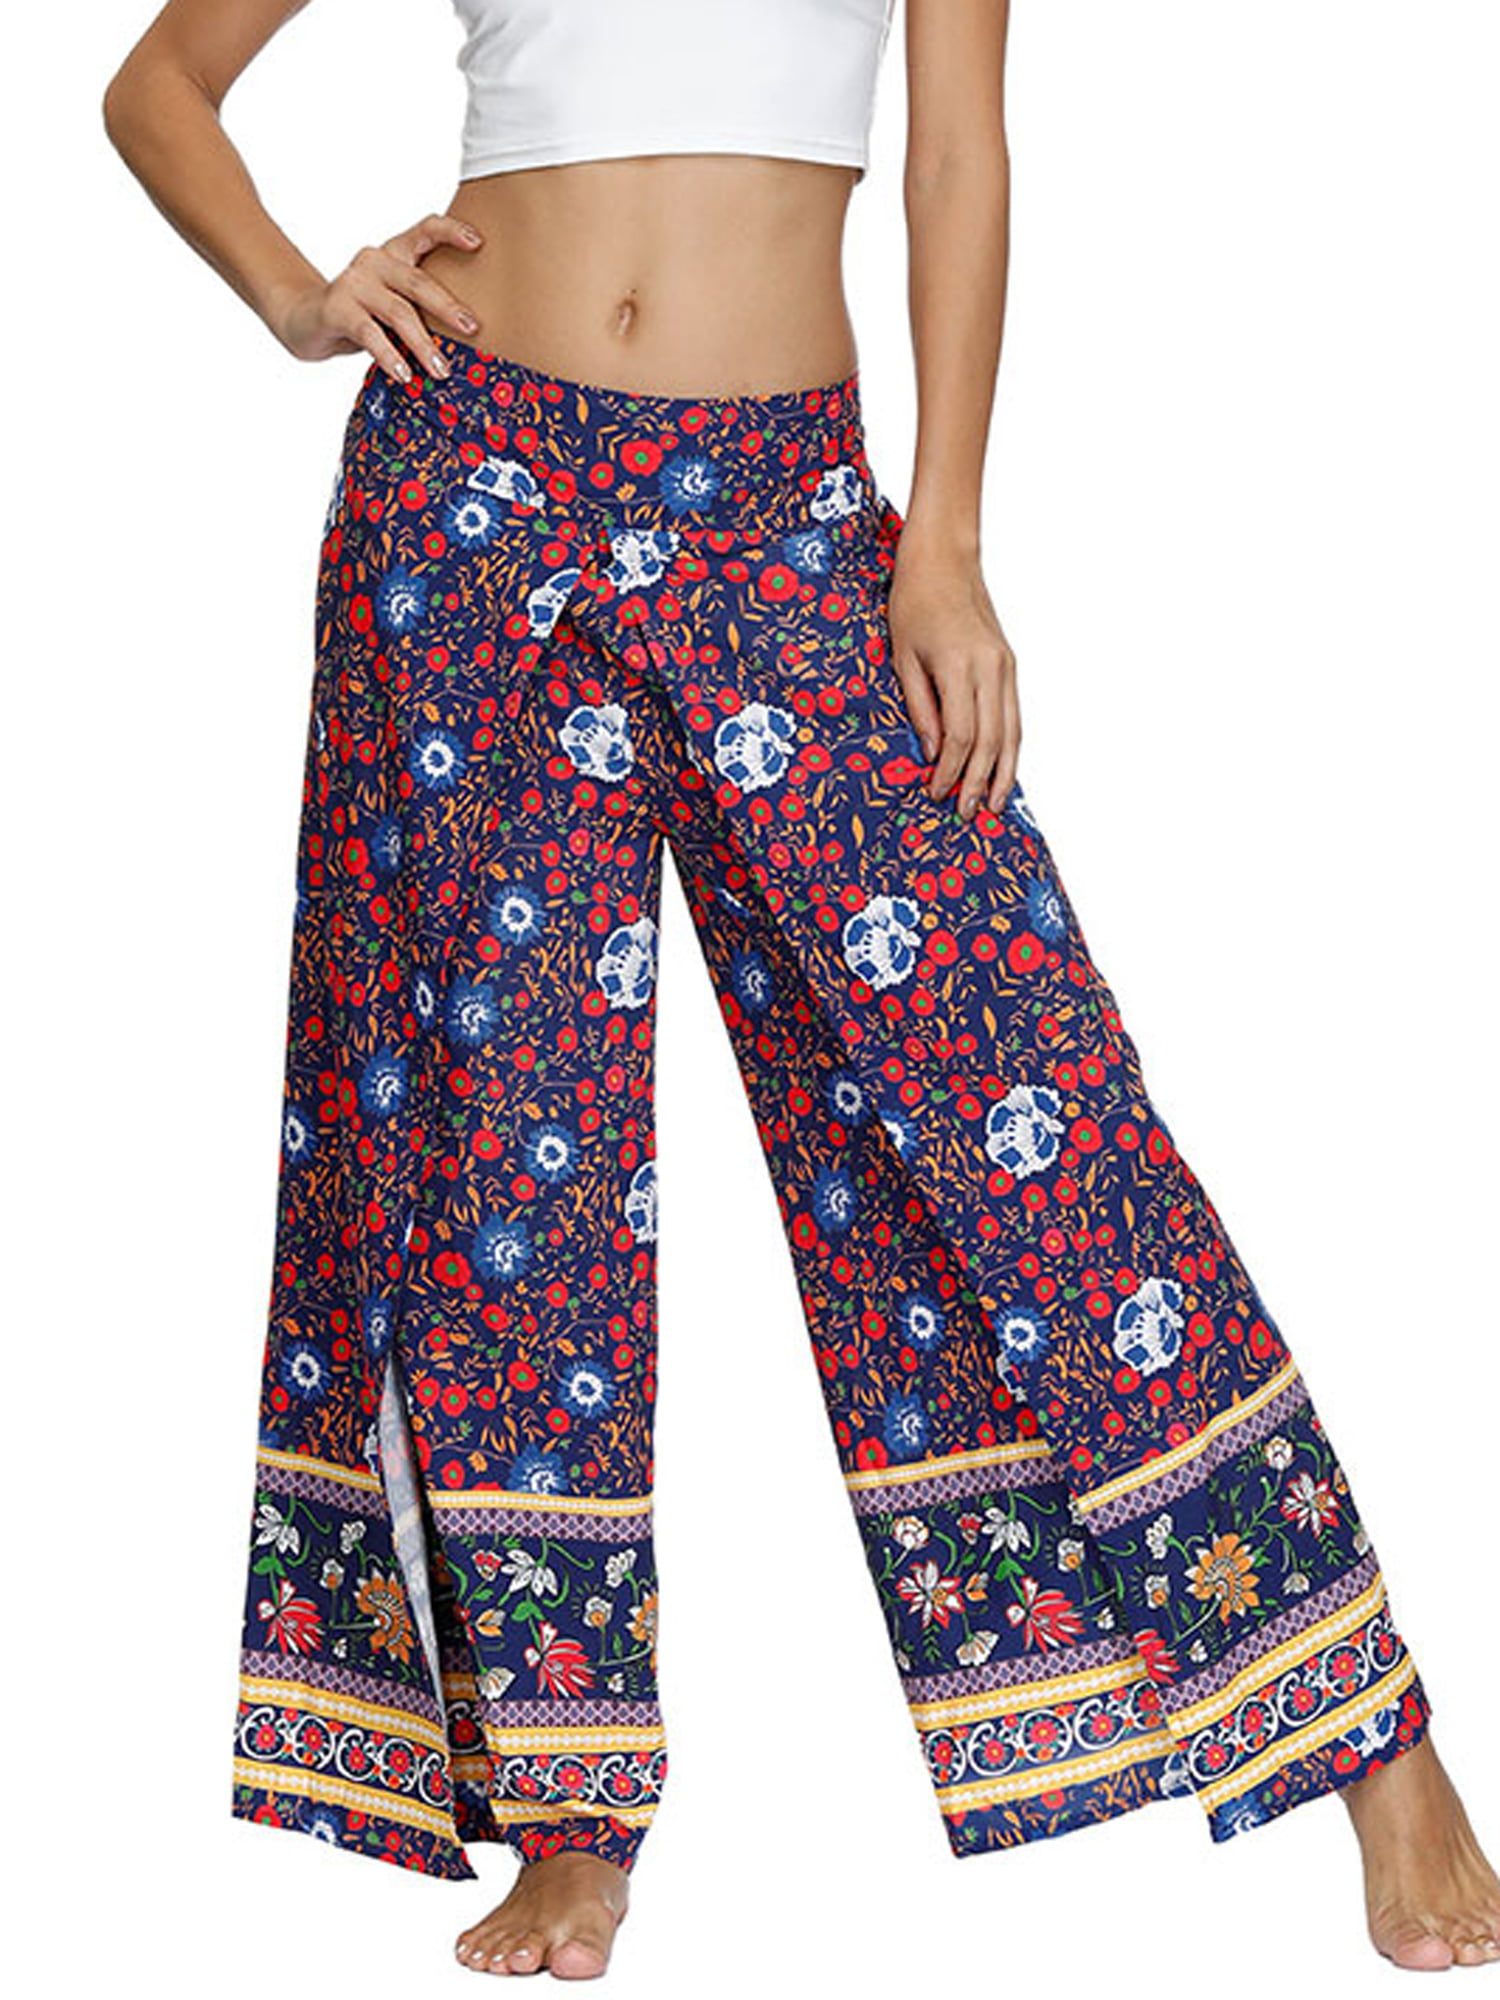 Oubaybay Women’s Wide Leg Yoga Pants Stretch High Slit Hippie Harem Trousers